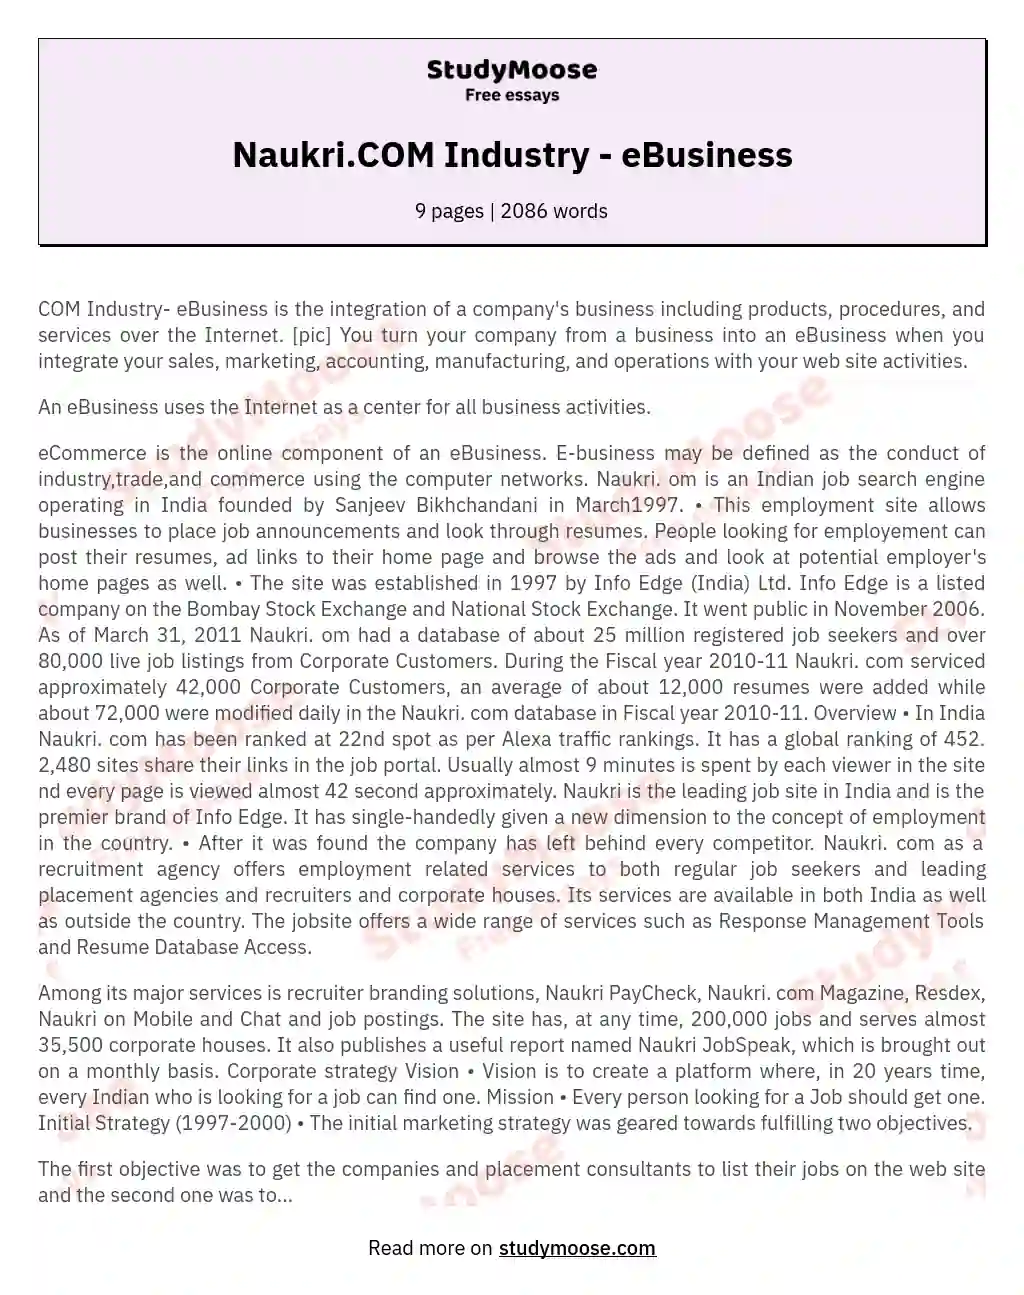 Naukri.COM Industry - eBusiness essay